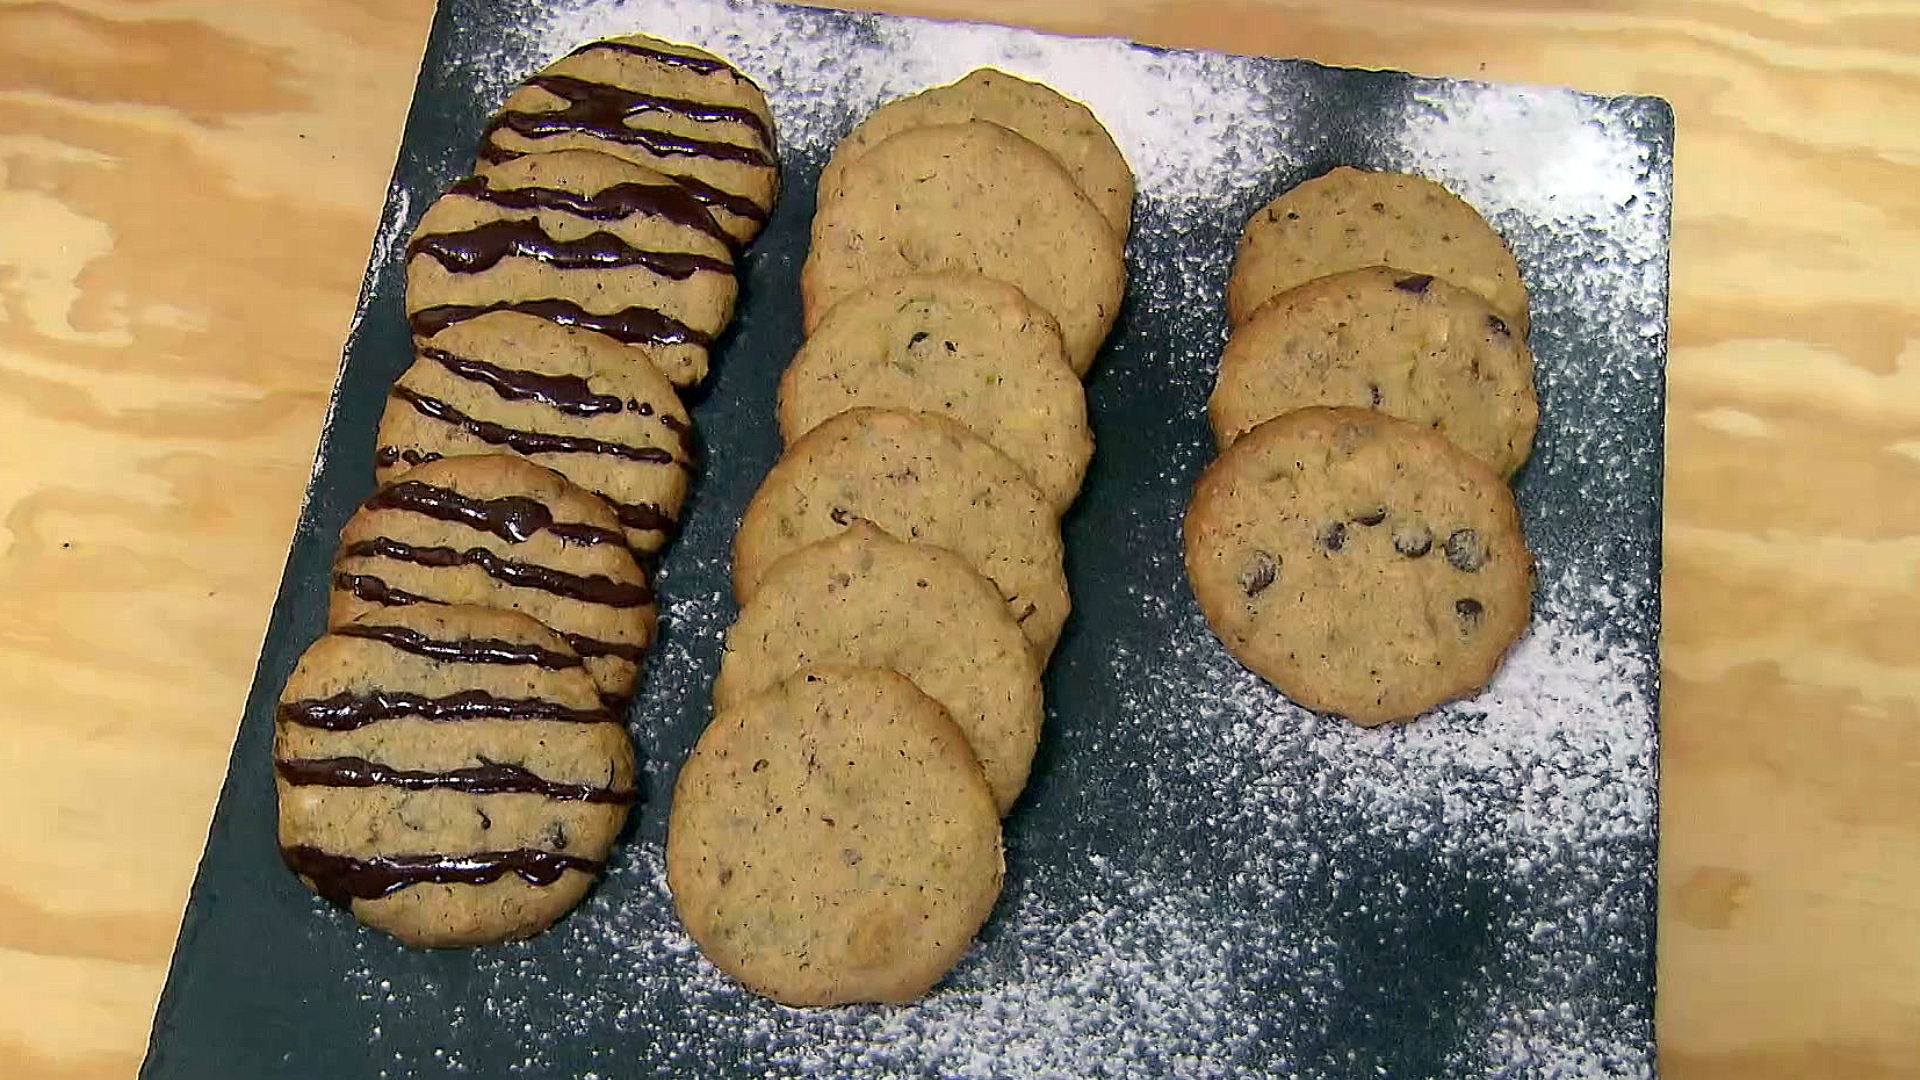 Cookies caseras con pepitas de chocolate, receta super fácil paso a paso